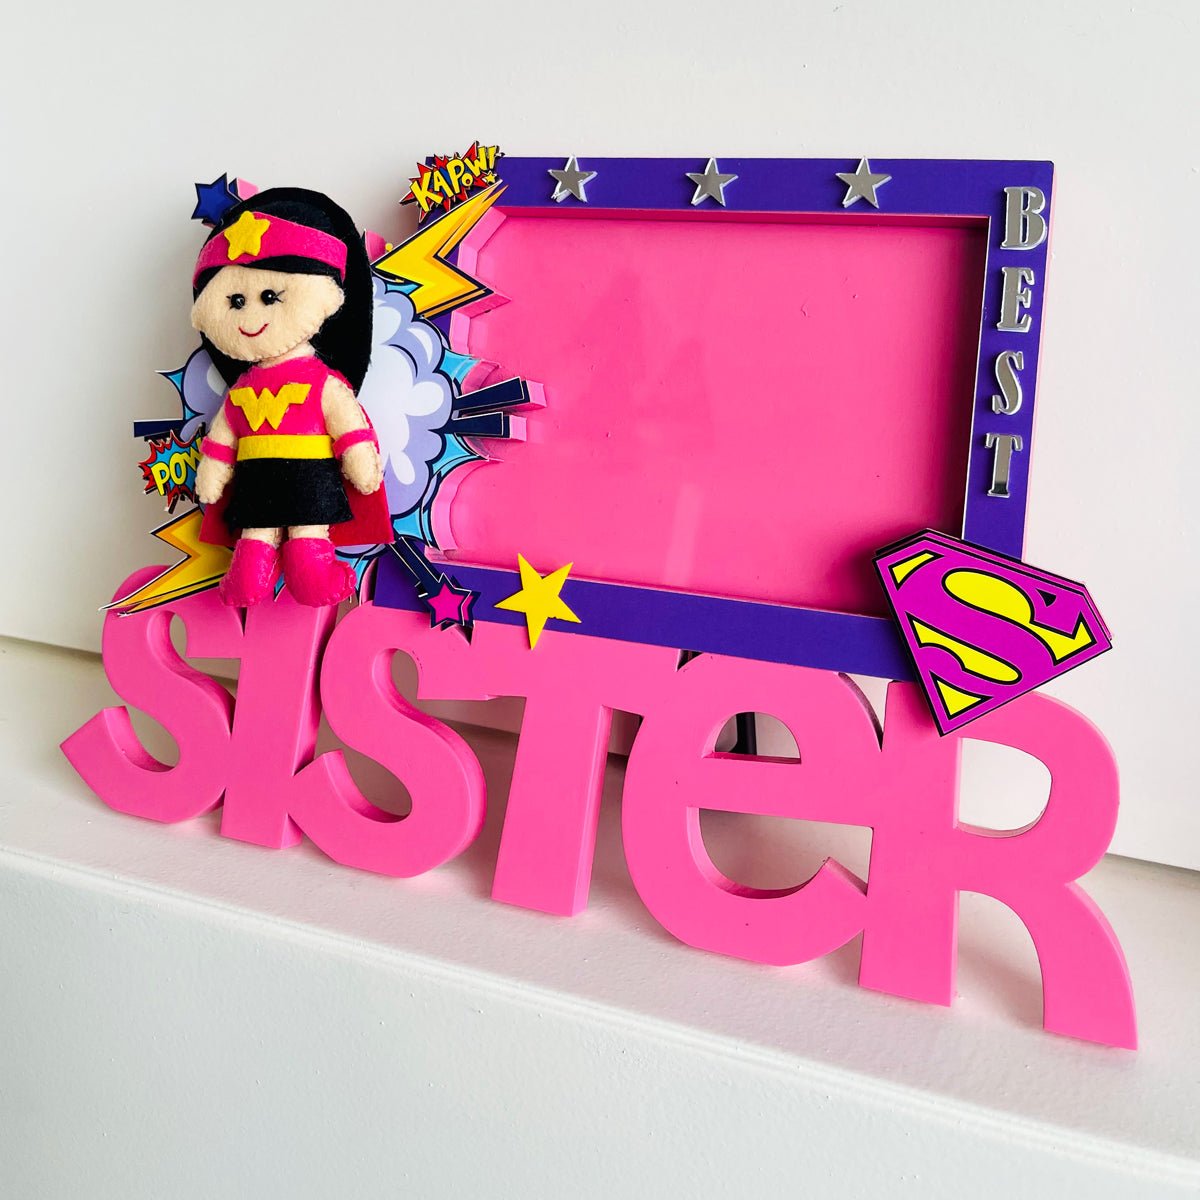 Best Sister Photo Frame - Little Surprise BoxBest Sister Photo Frame